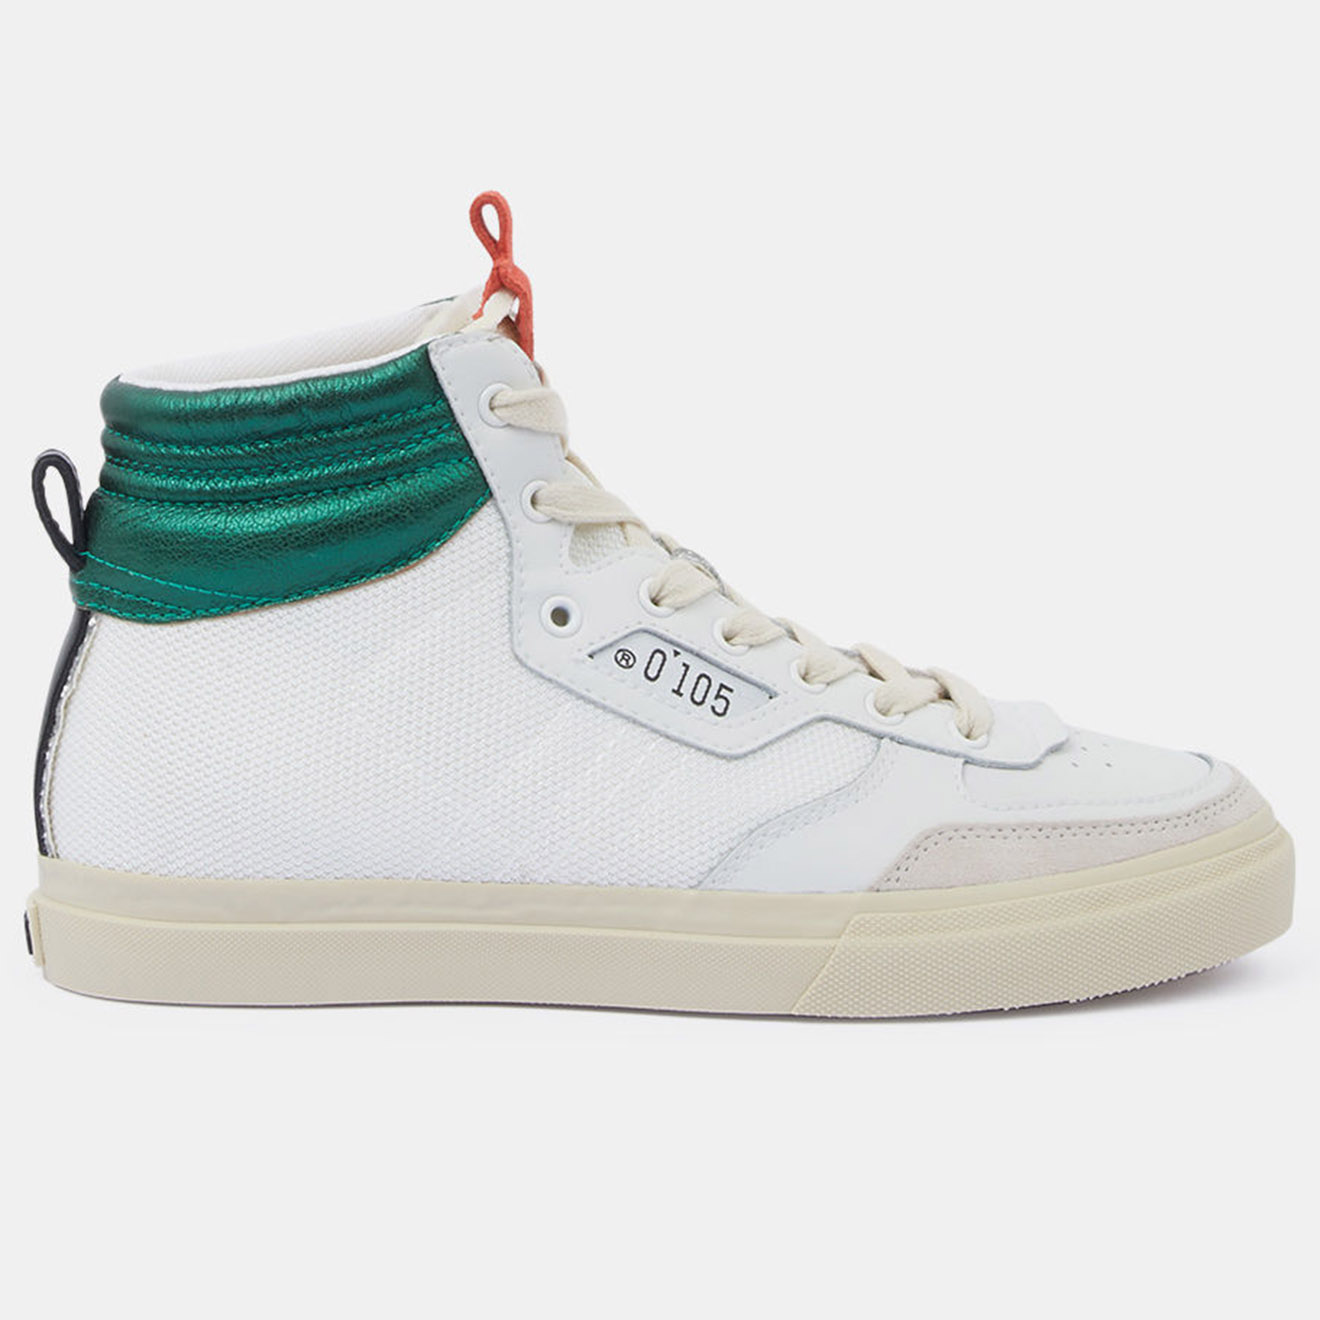 zero 105 - baskets hautes blanc/vert